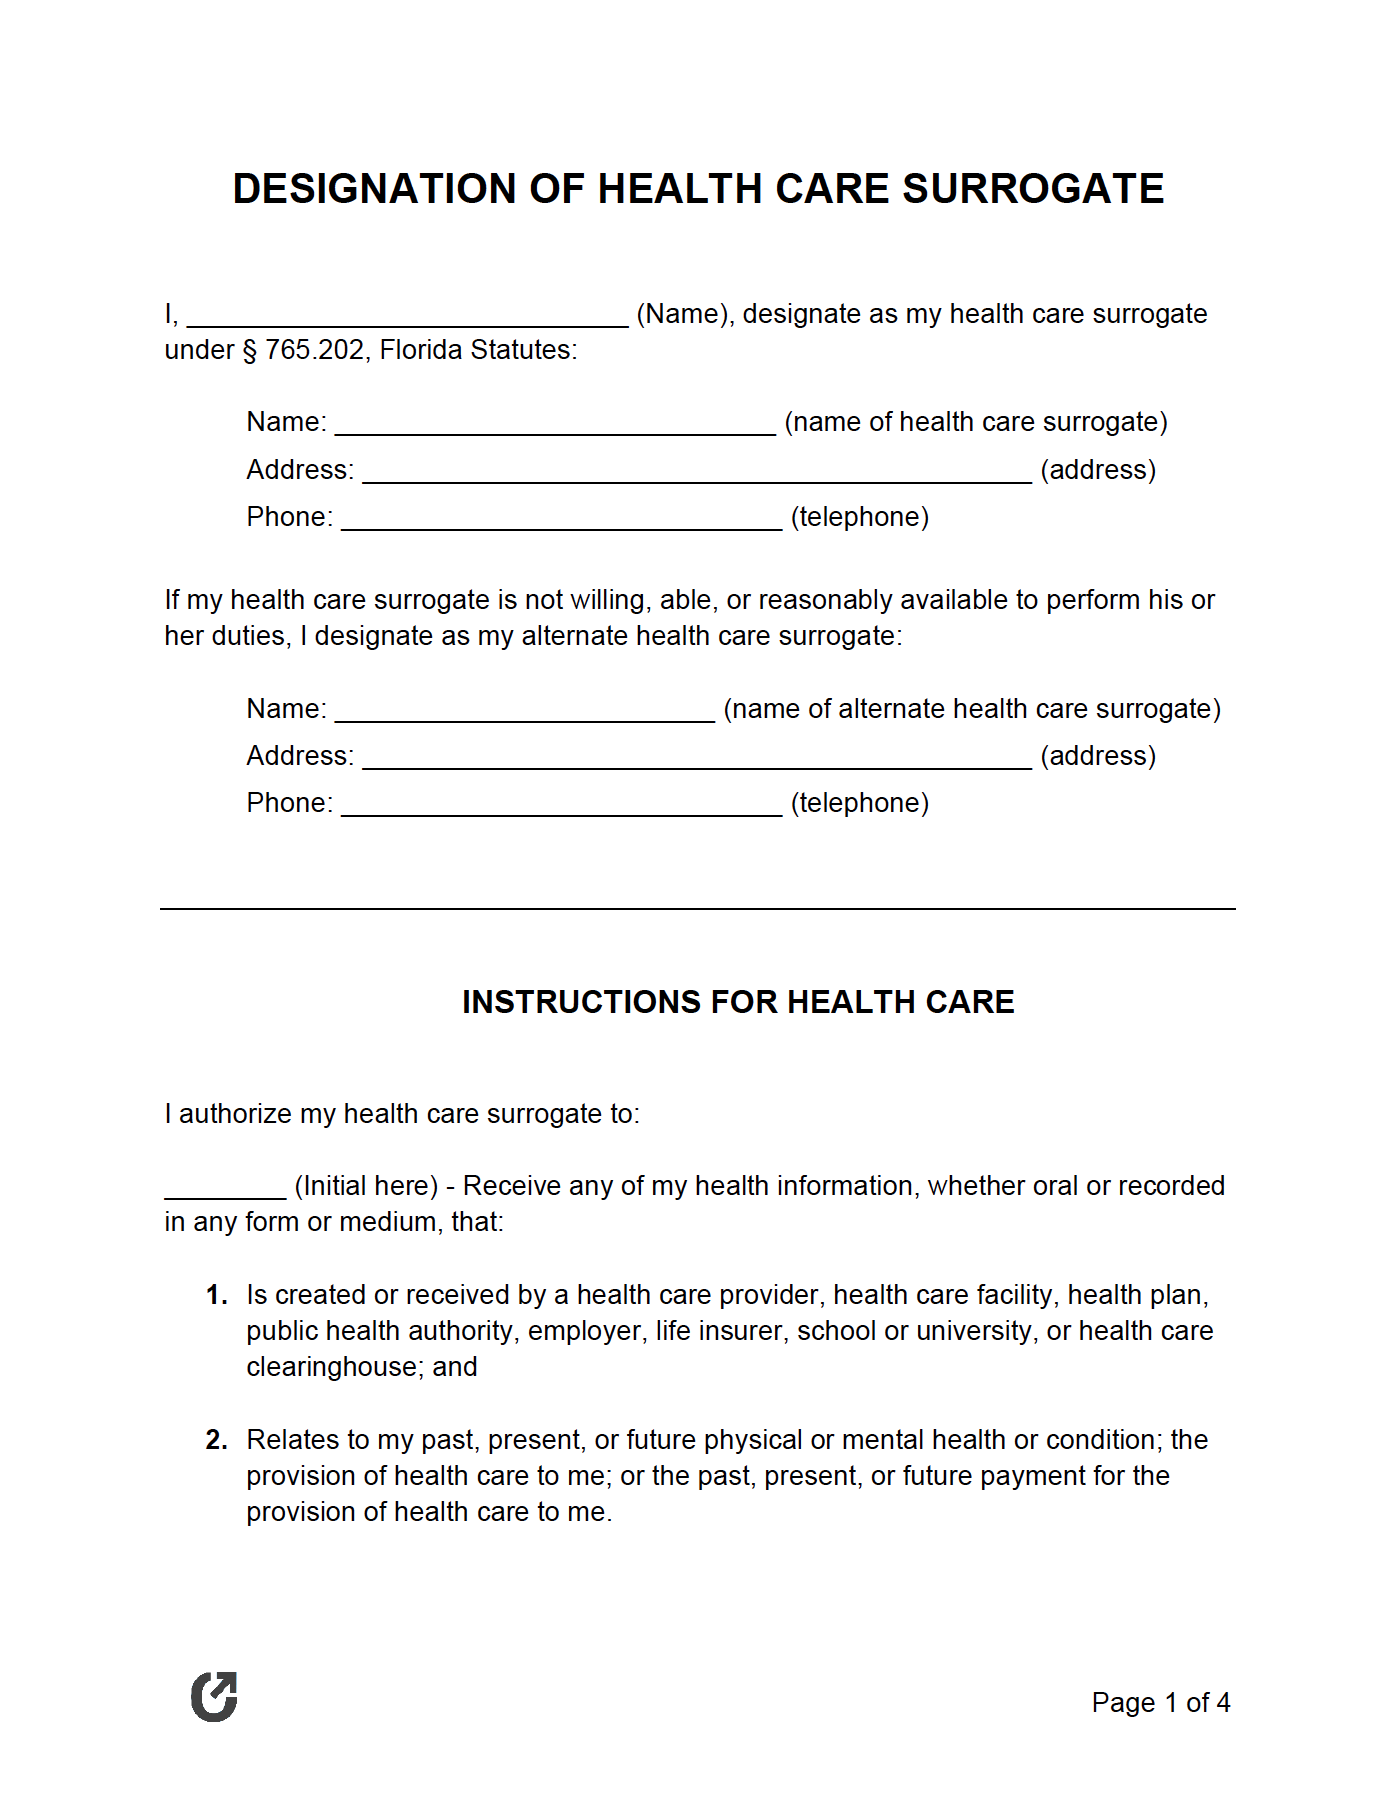 designation-of-health-care-surrogate-florida-printable-form-printable